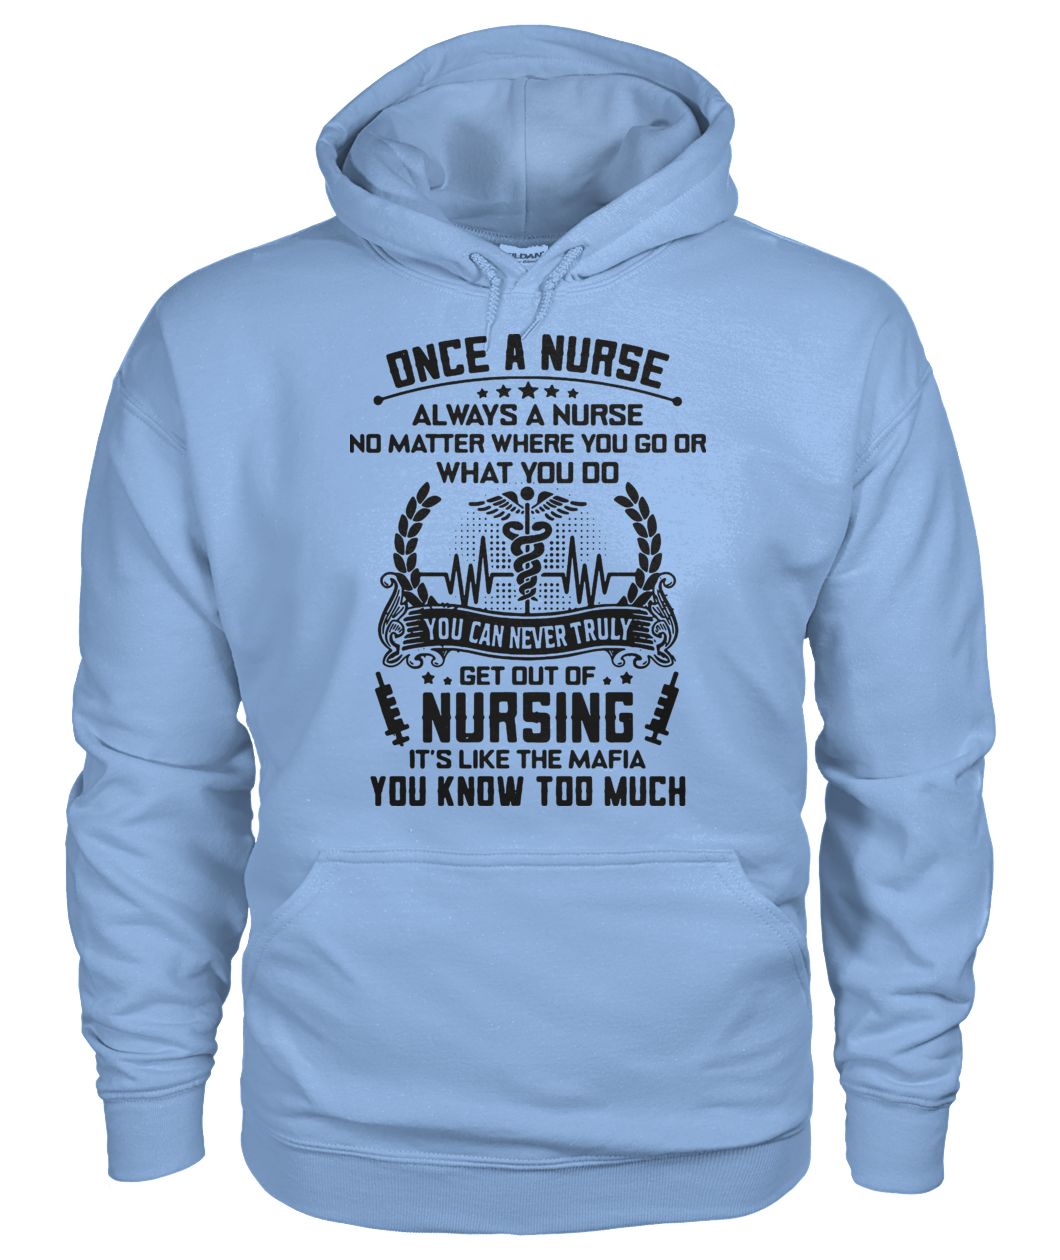 Once a nurse always a nurse no matter where you go or what you do gildan hoodie